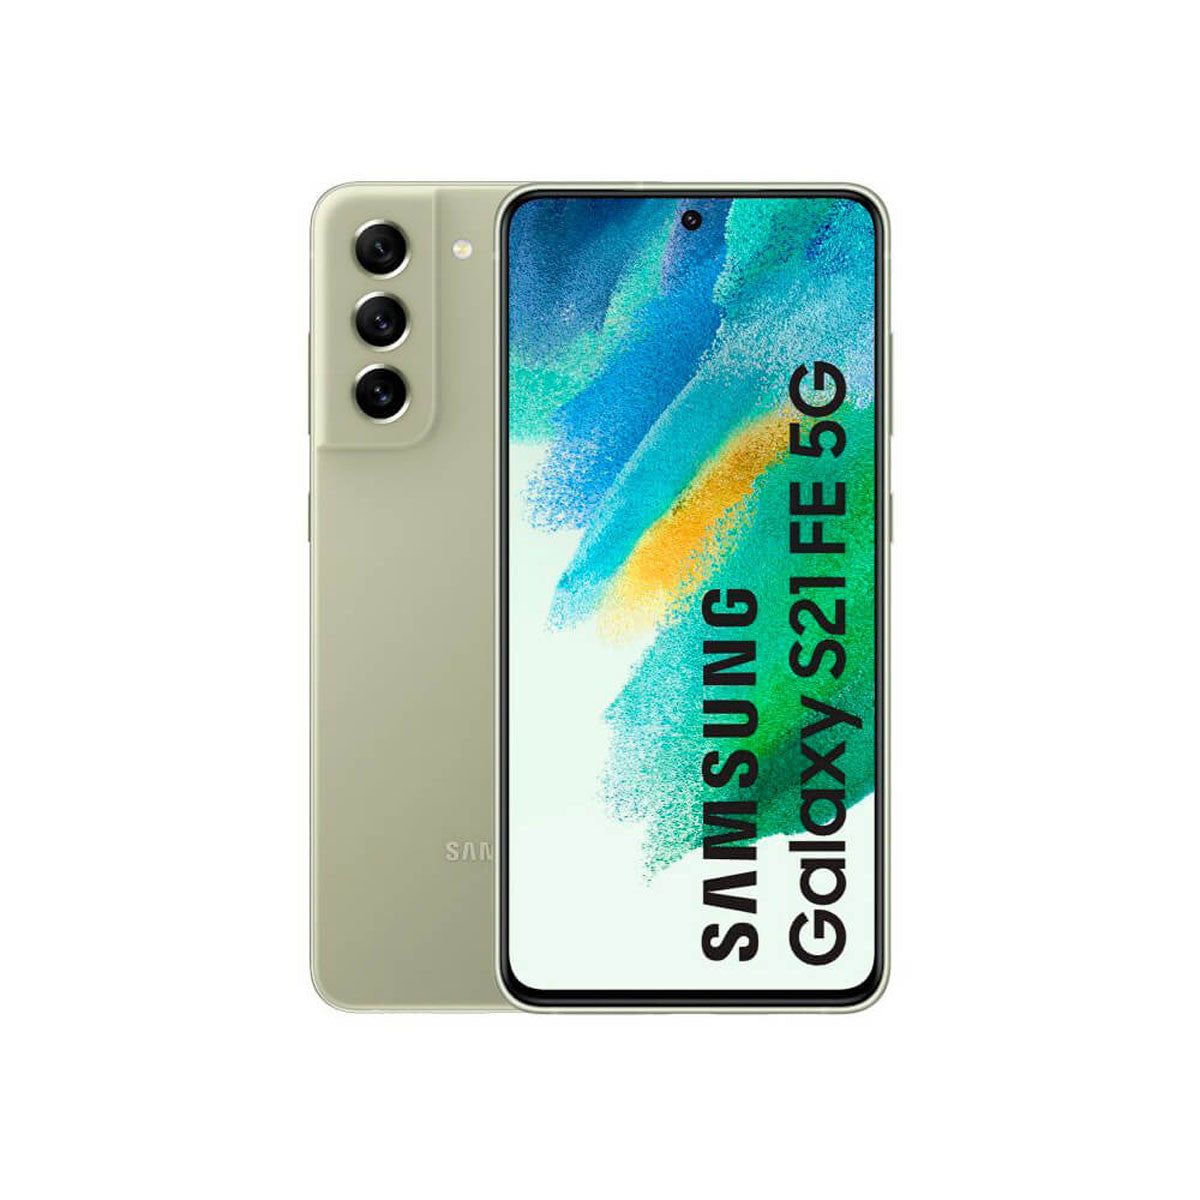 Samsung Galaxy S21 FE 5G 6GB/128GB Verde Oliva (Olive) Dual SIM G990 Smartphone | Samsung